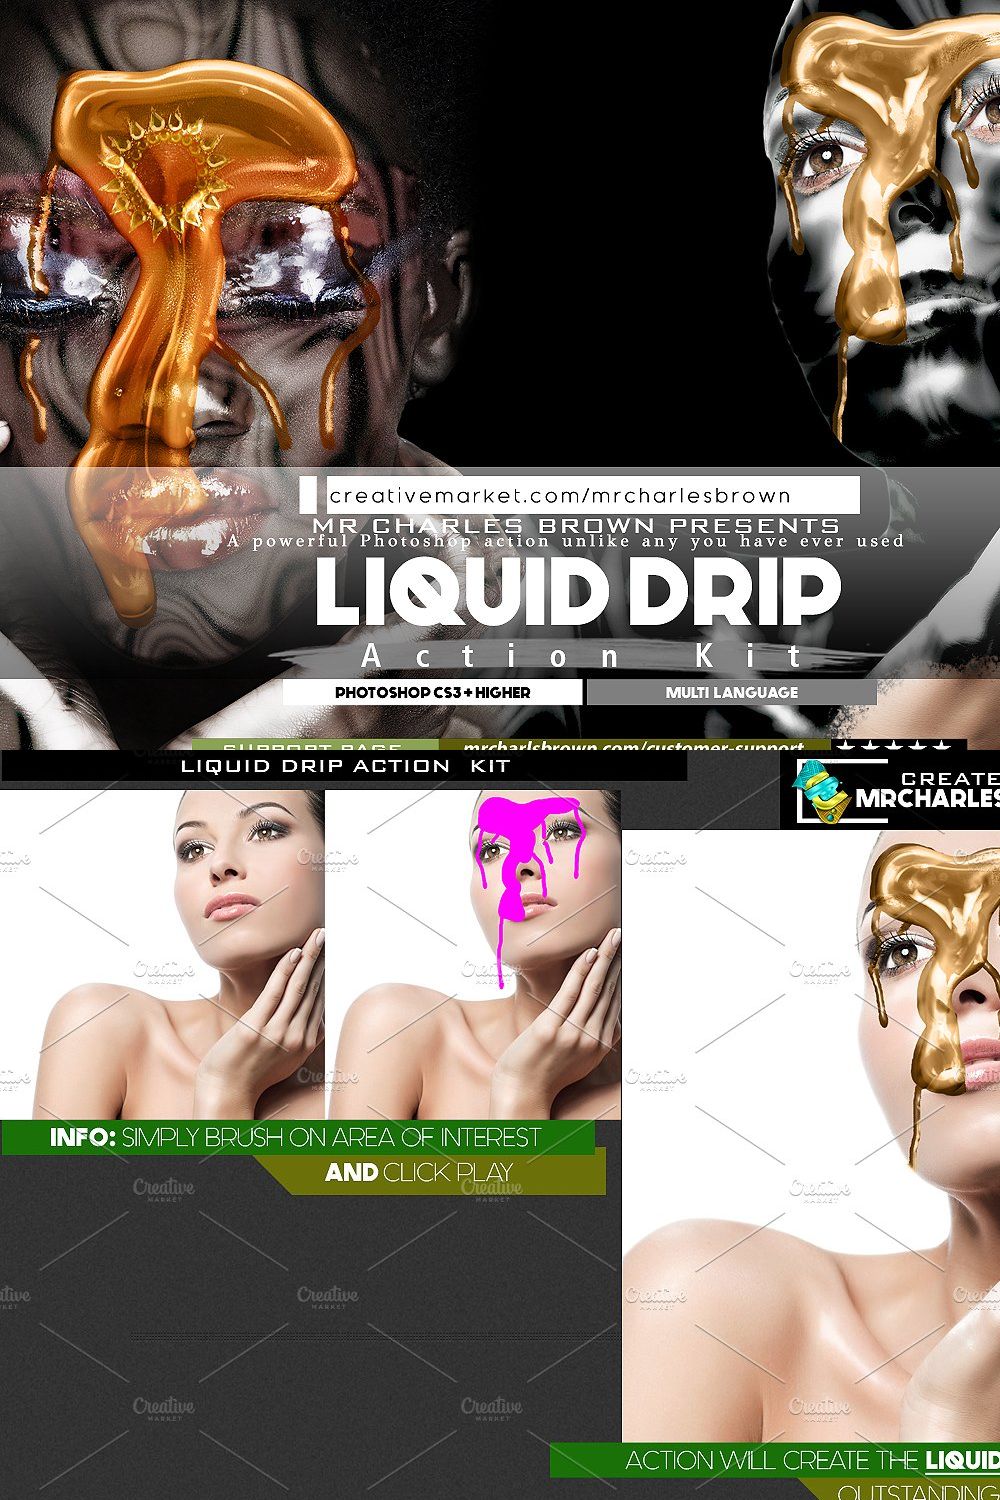 Liquid Drip Action Kit pinterest preview image.